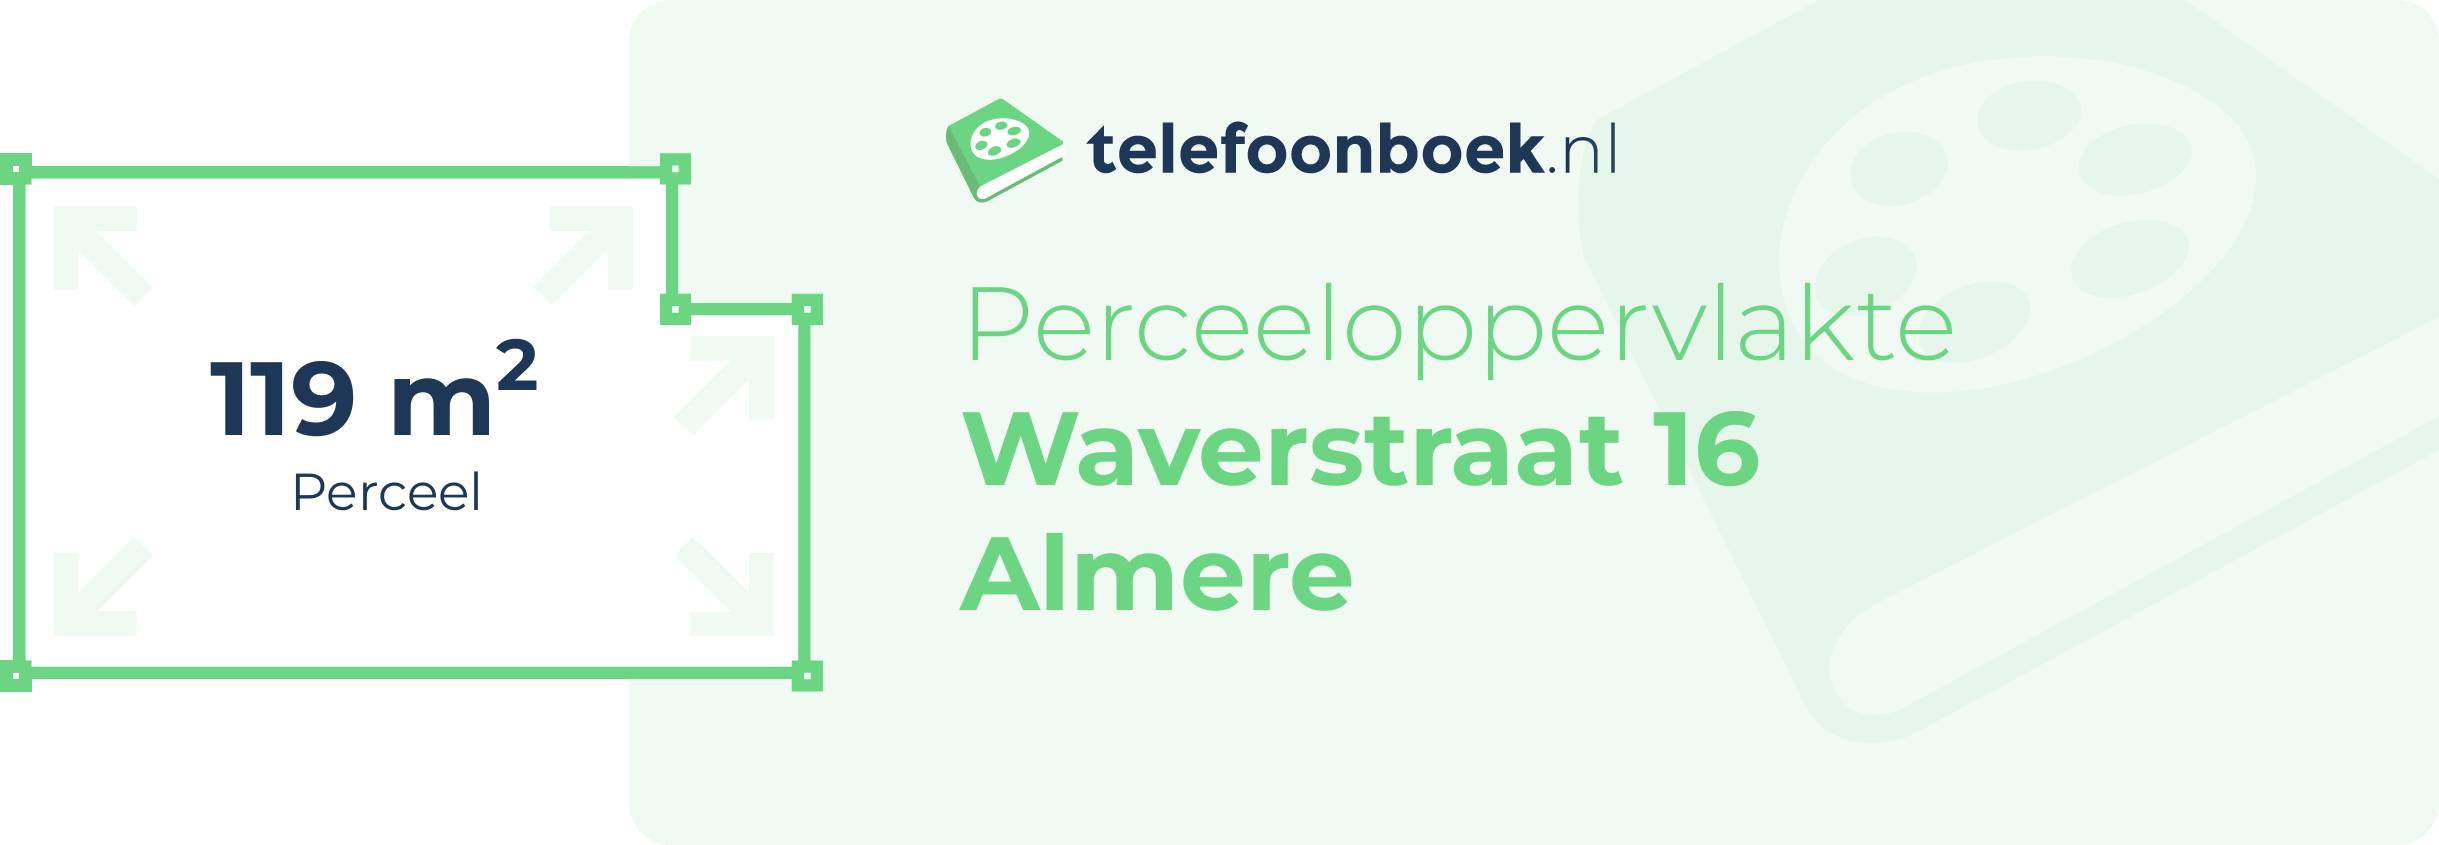 Perceeloppervlakte Waverstraat 16 Almere